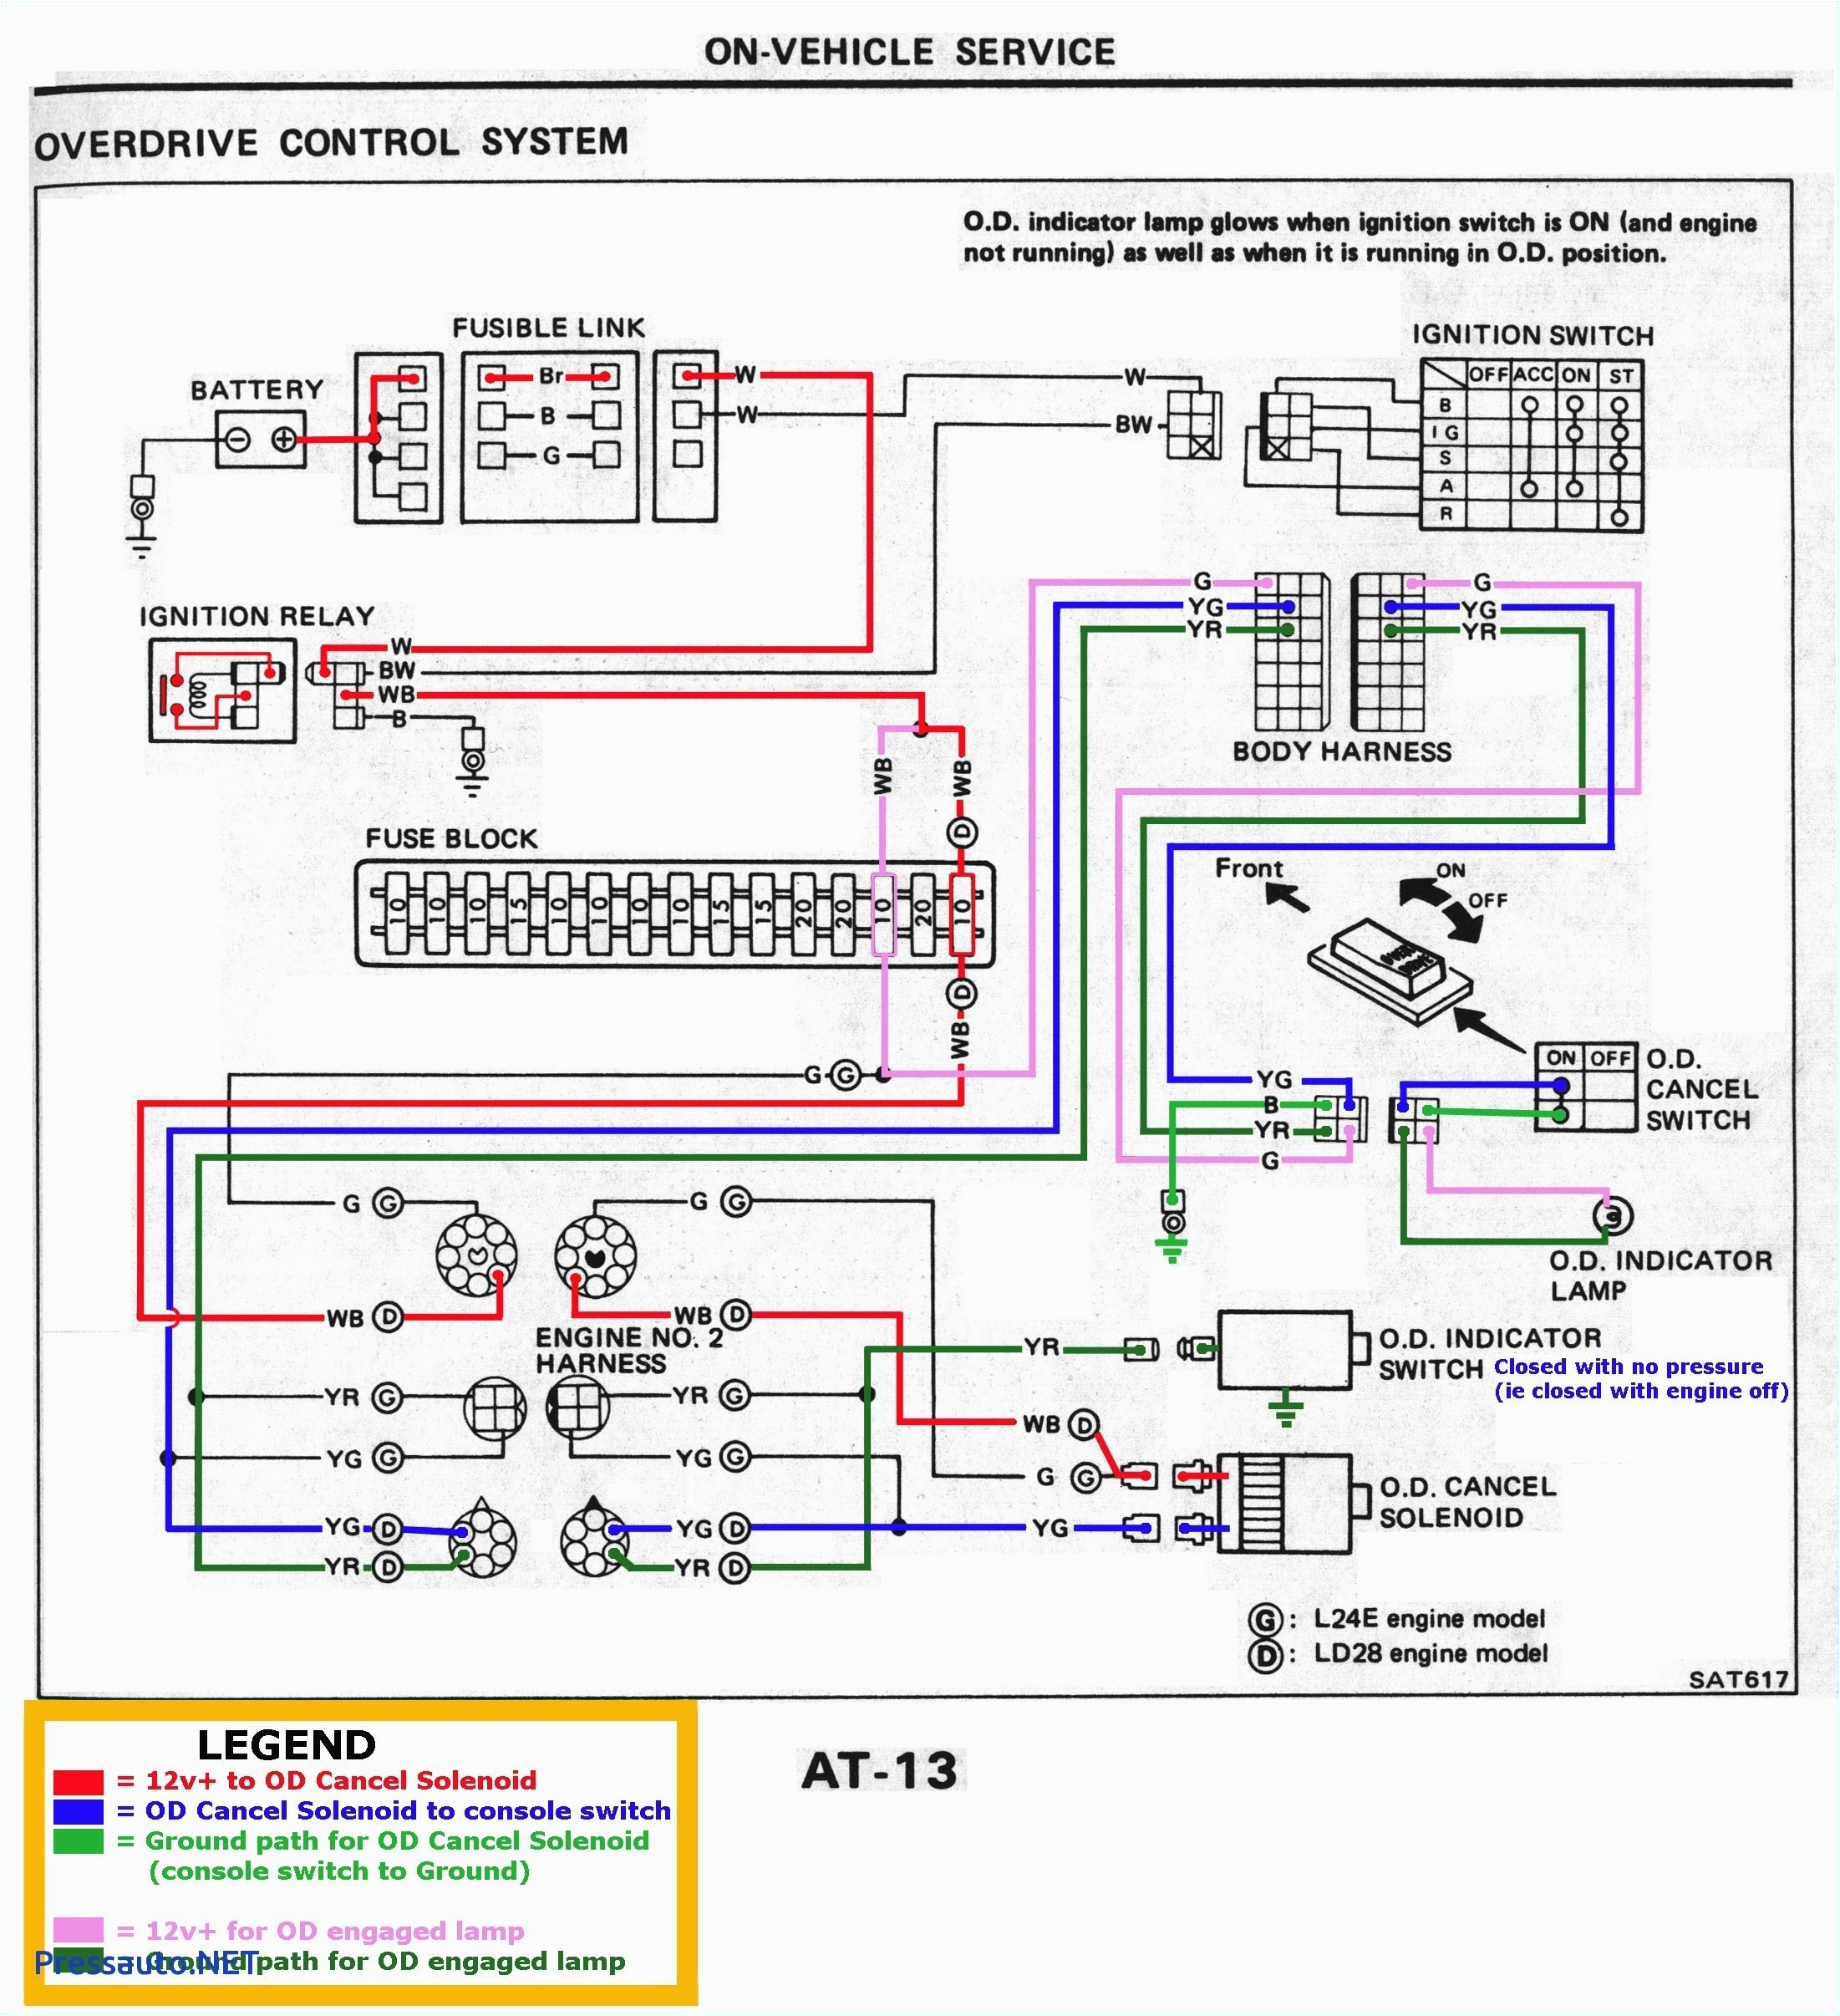 2006 sonata fuse box diagram wiring diagram technic